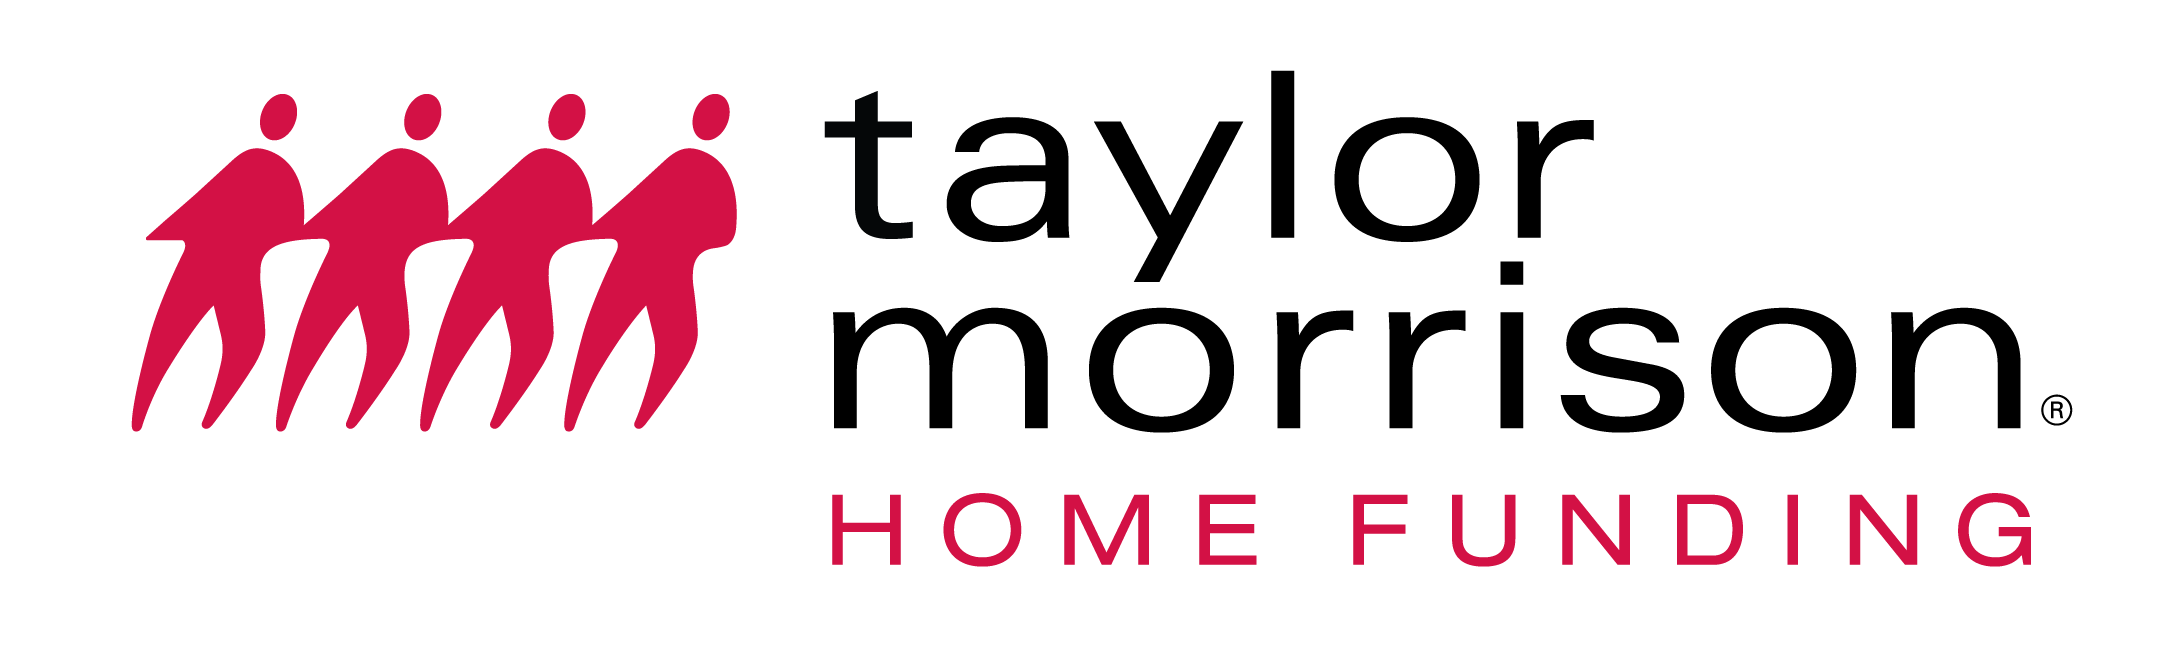 Taylor Morrison Home Funding Company Logo